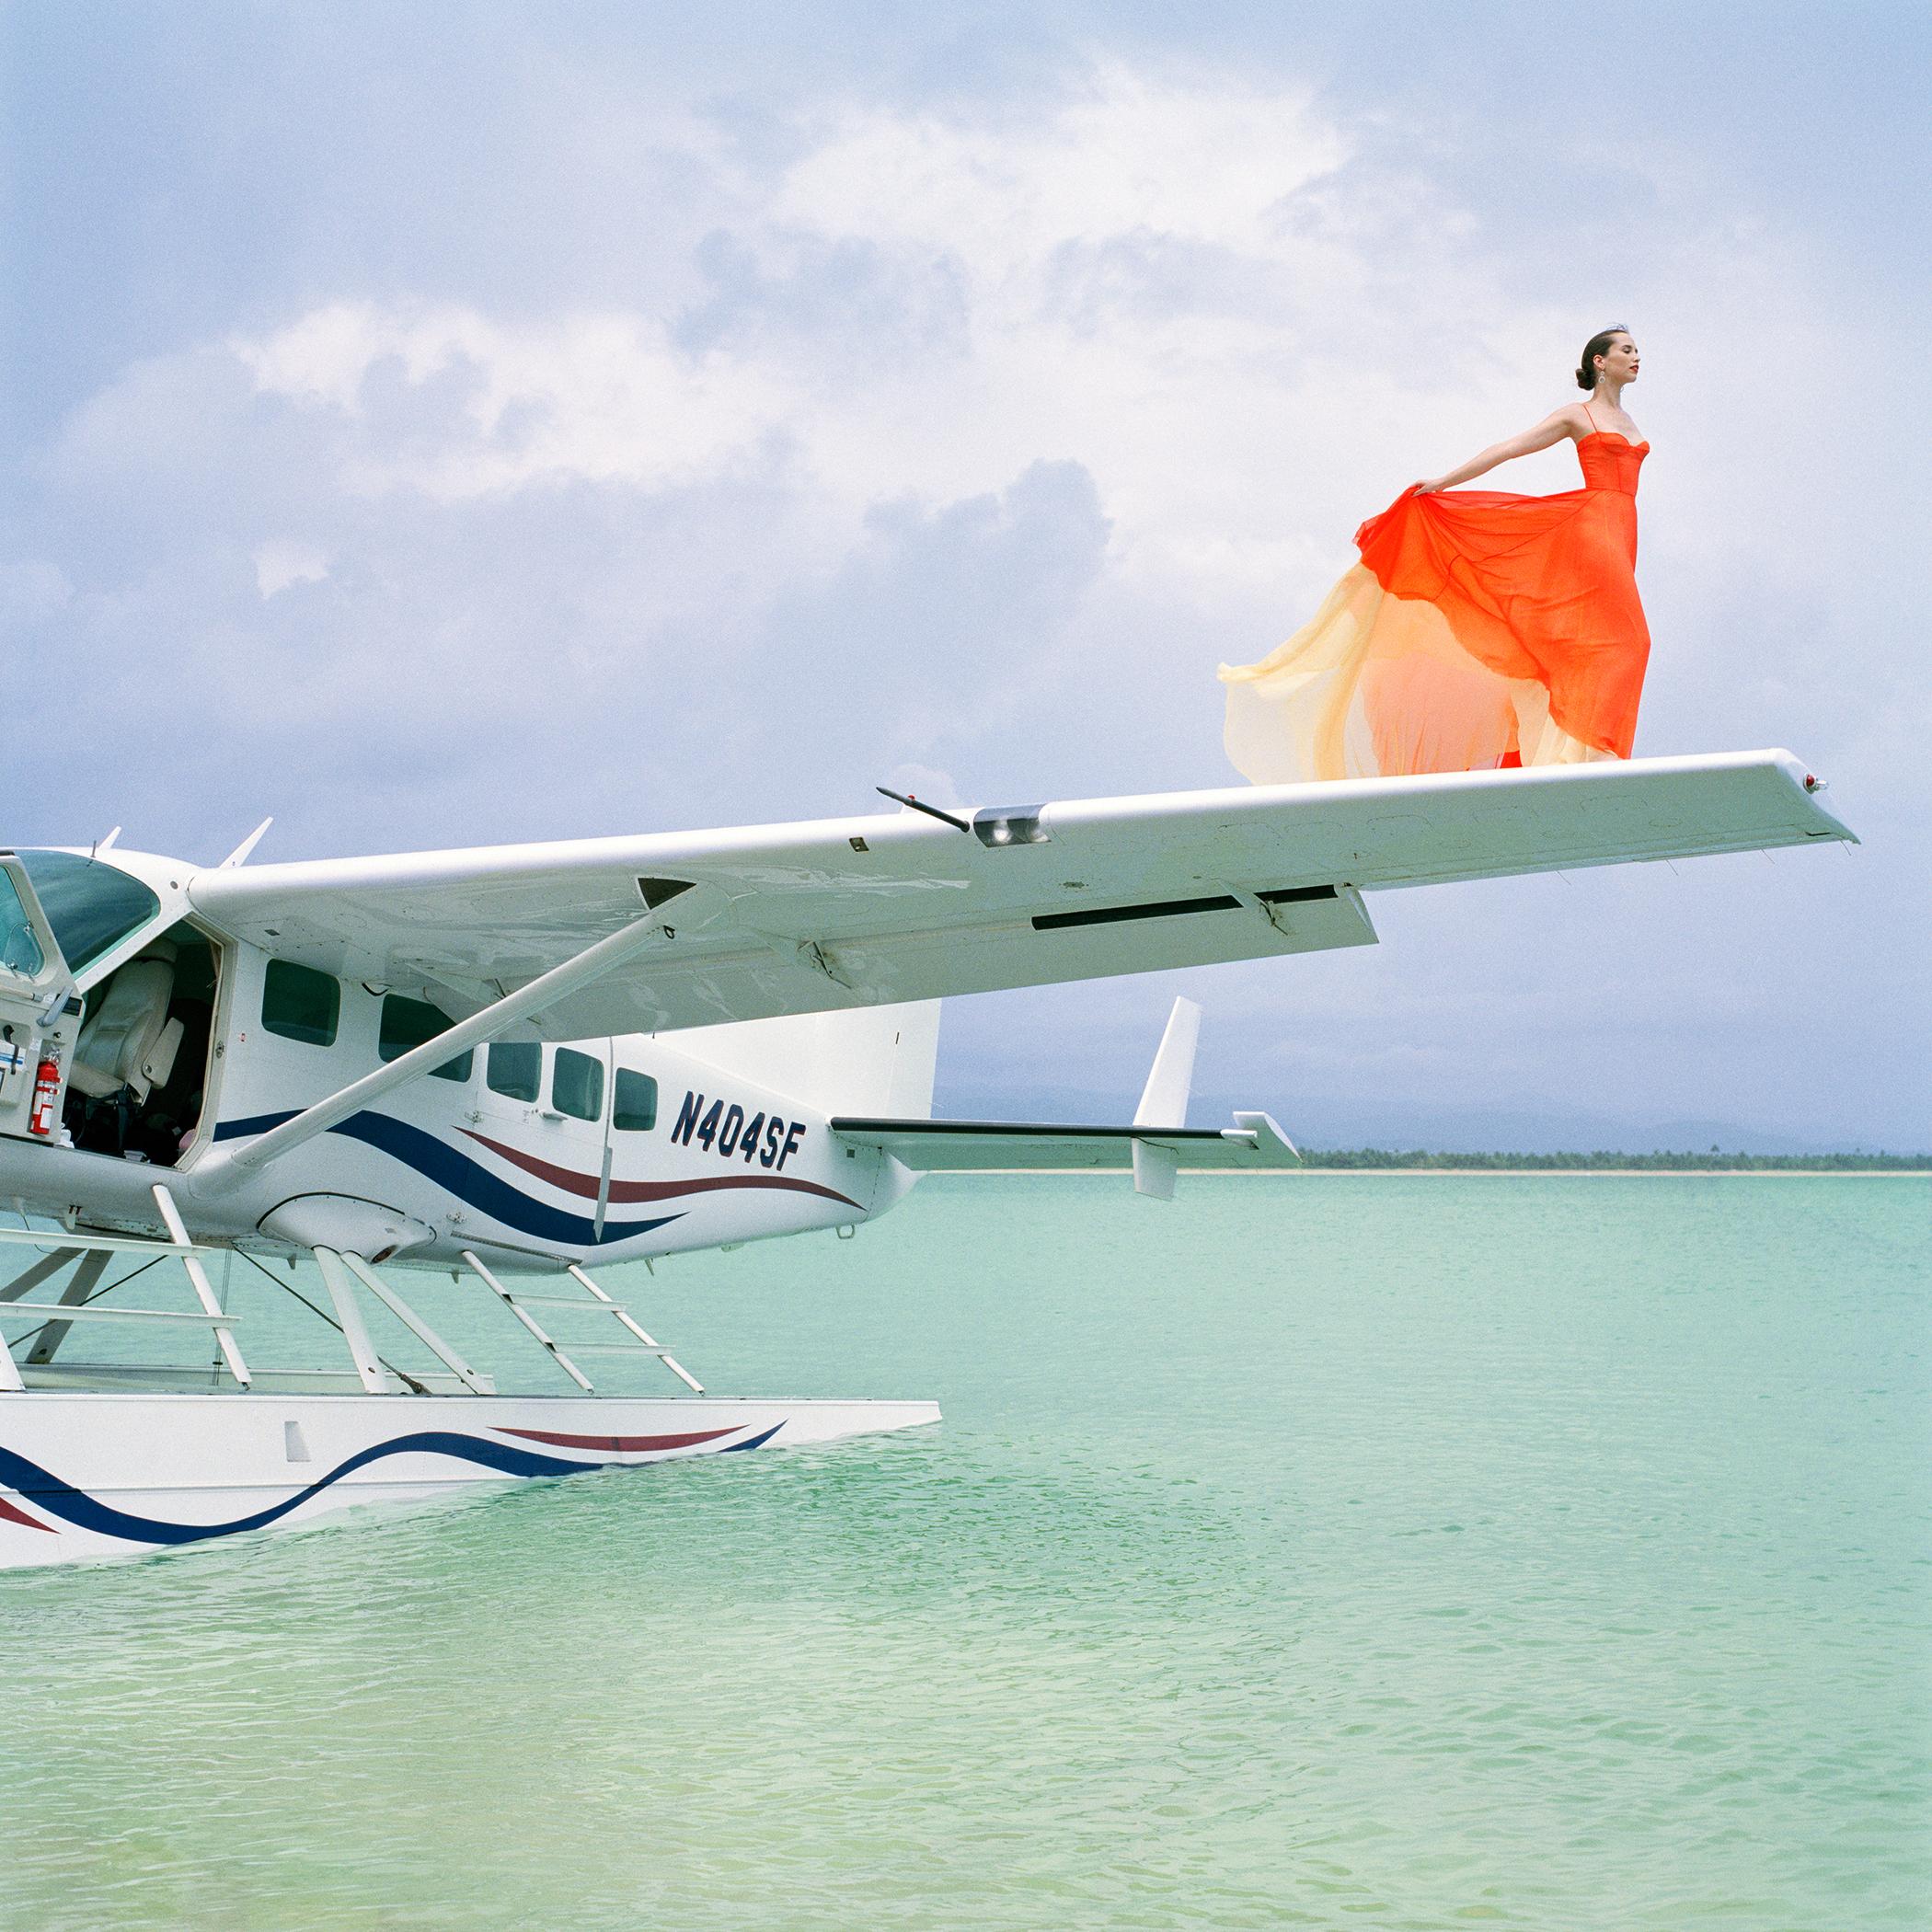 Color Photograph Rodney Smith - Saori on Sea Plane Wing n° 2, République dominicaine